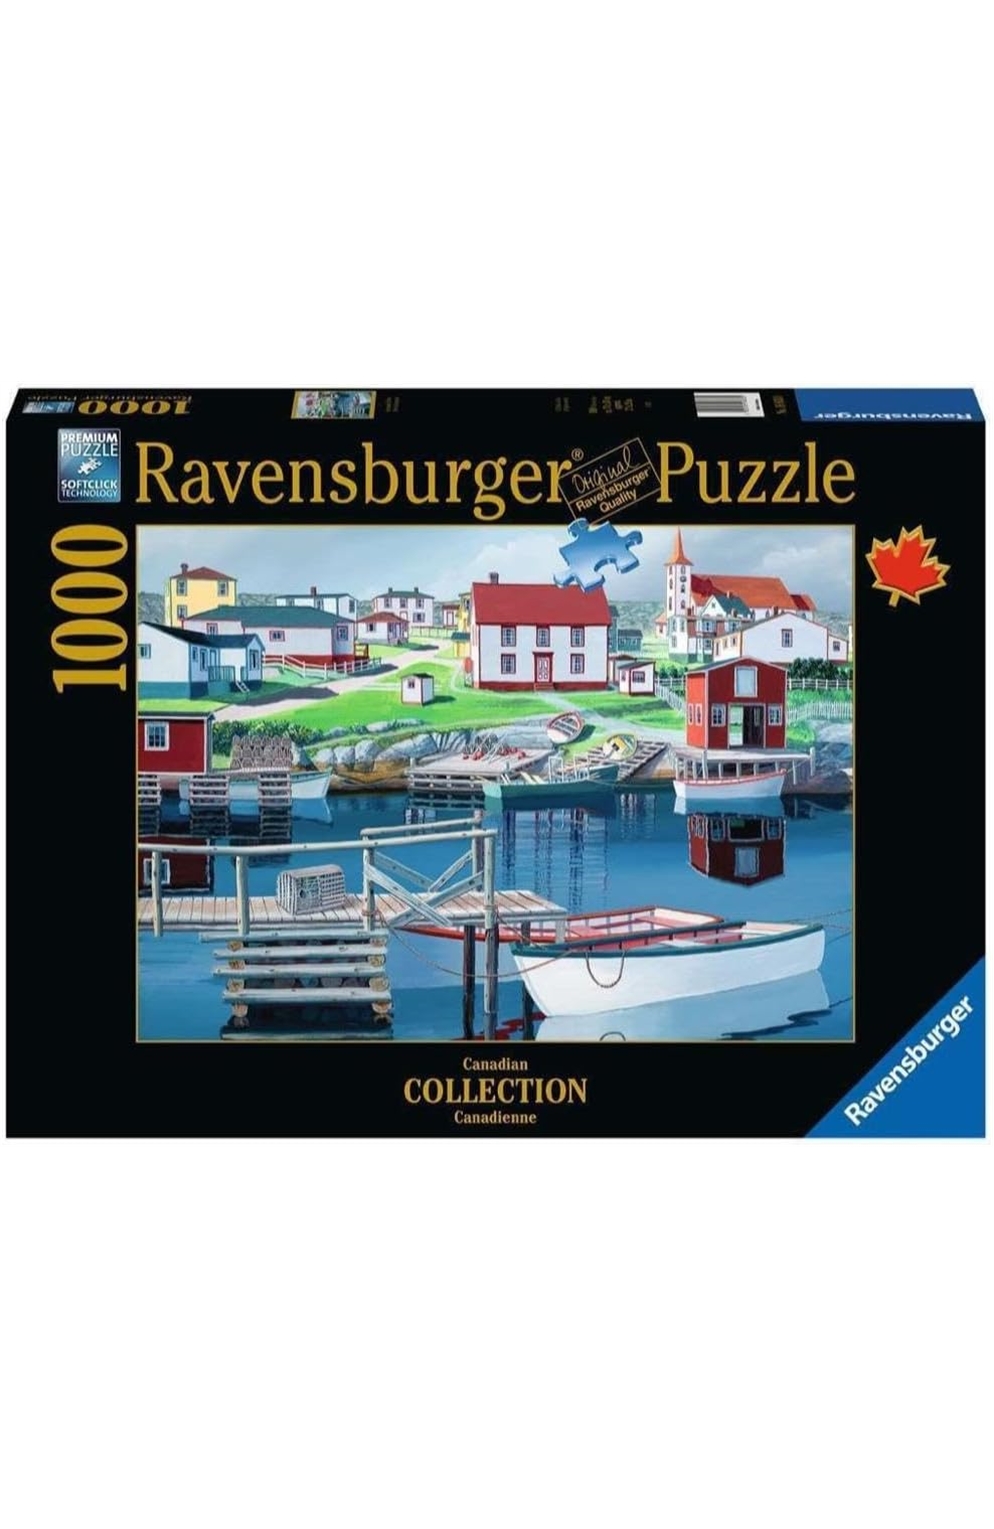 Greenspond Harbour - Ravensburger 1000 Piece Puzzle